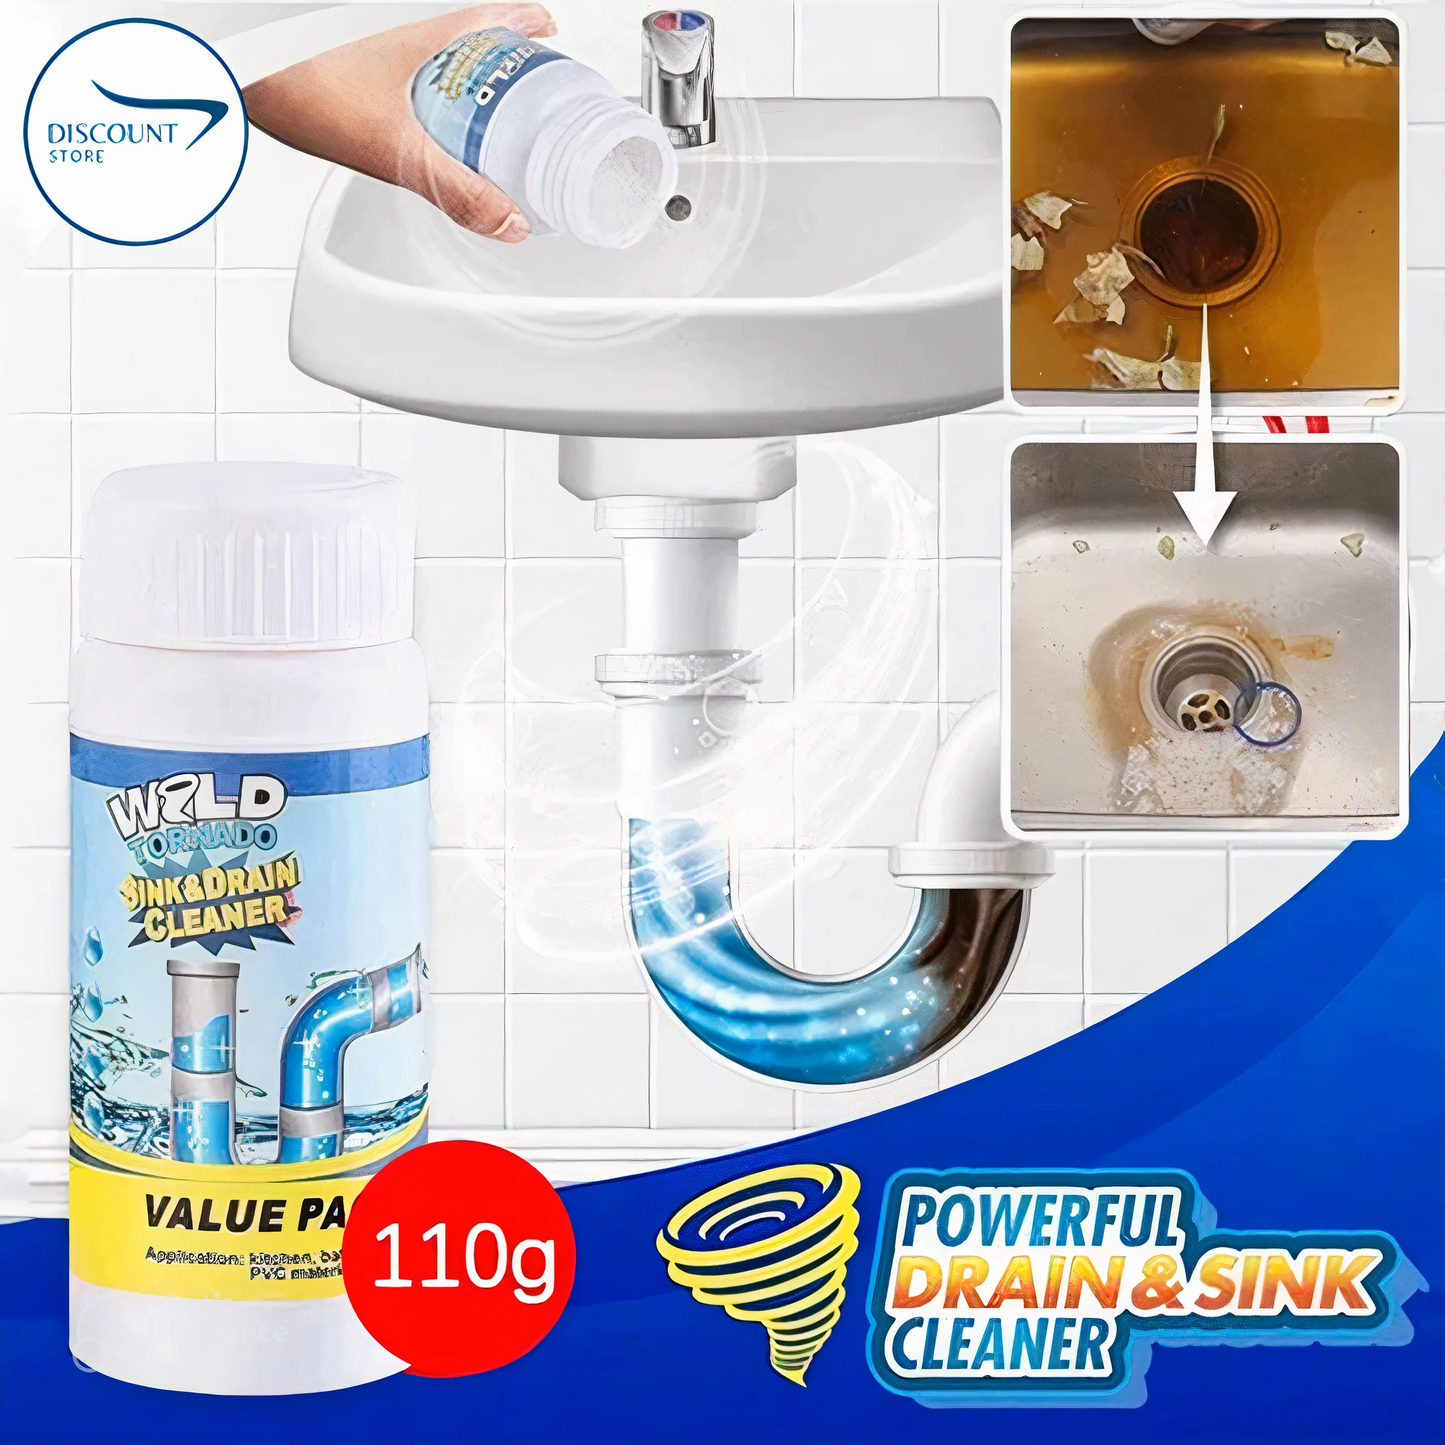 Powerful Drain & Sink Cleaner